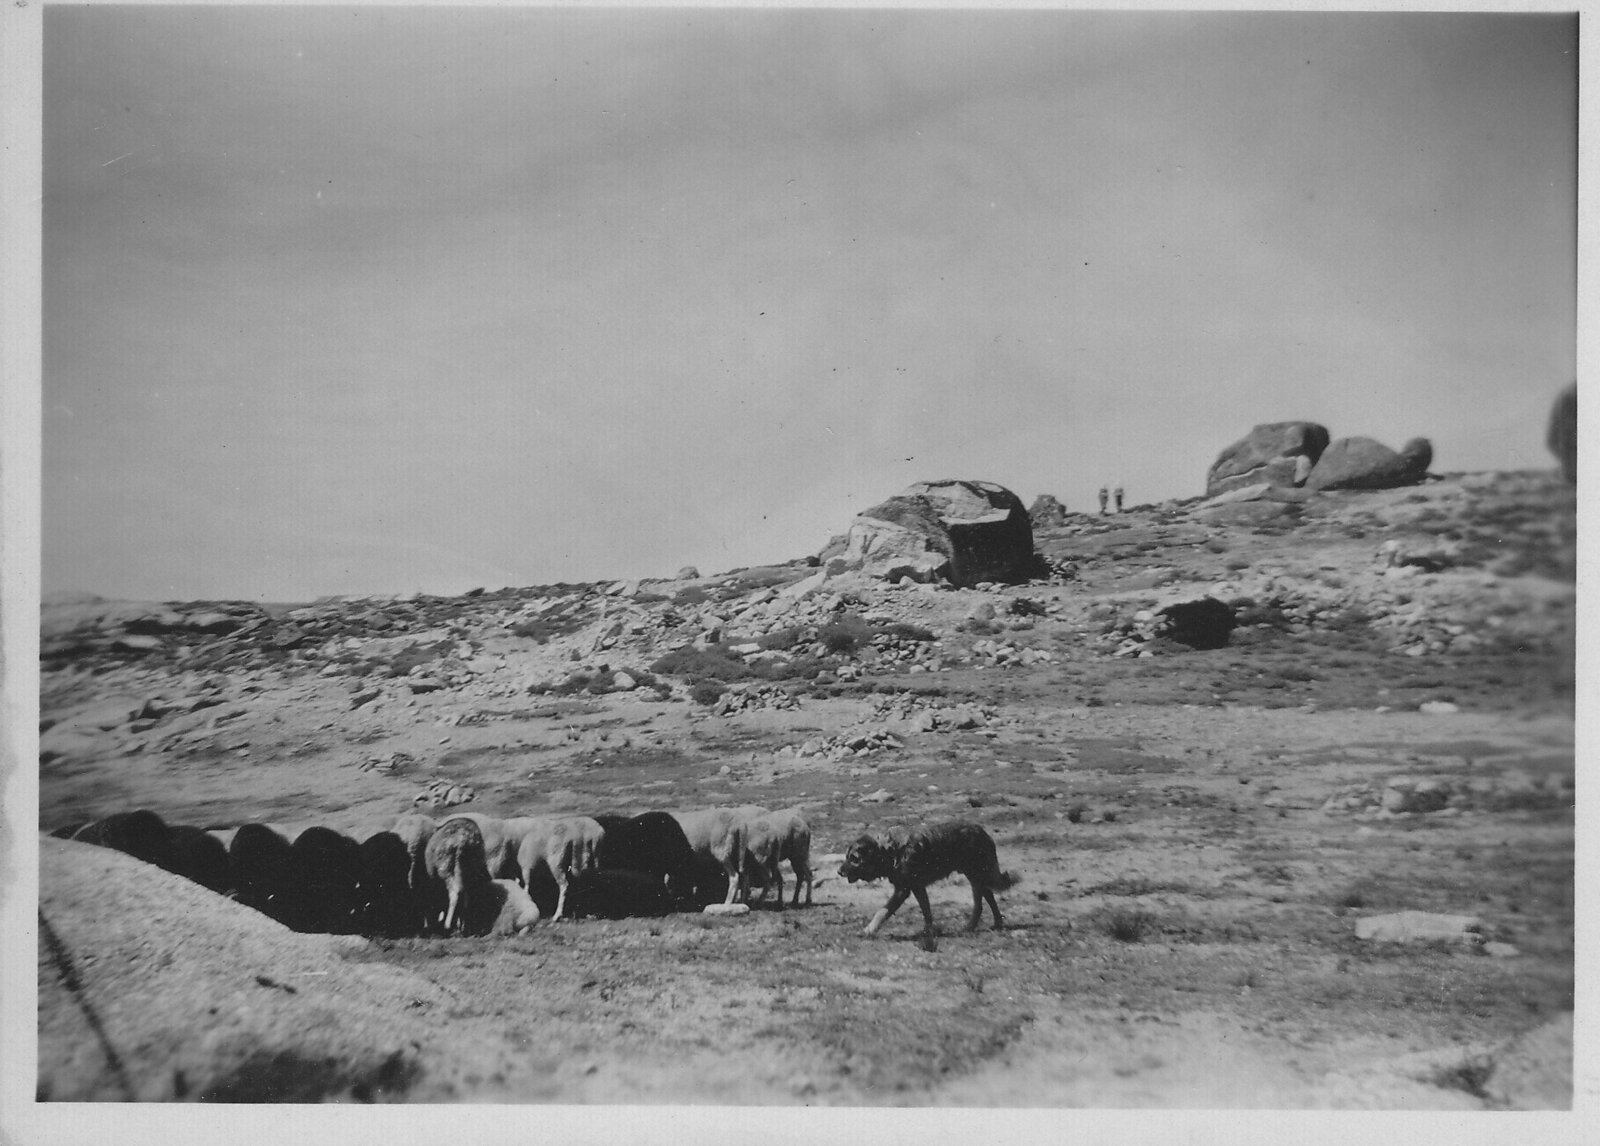 Serra da Estrela herd dog with sheep in 1949